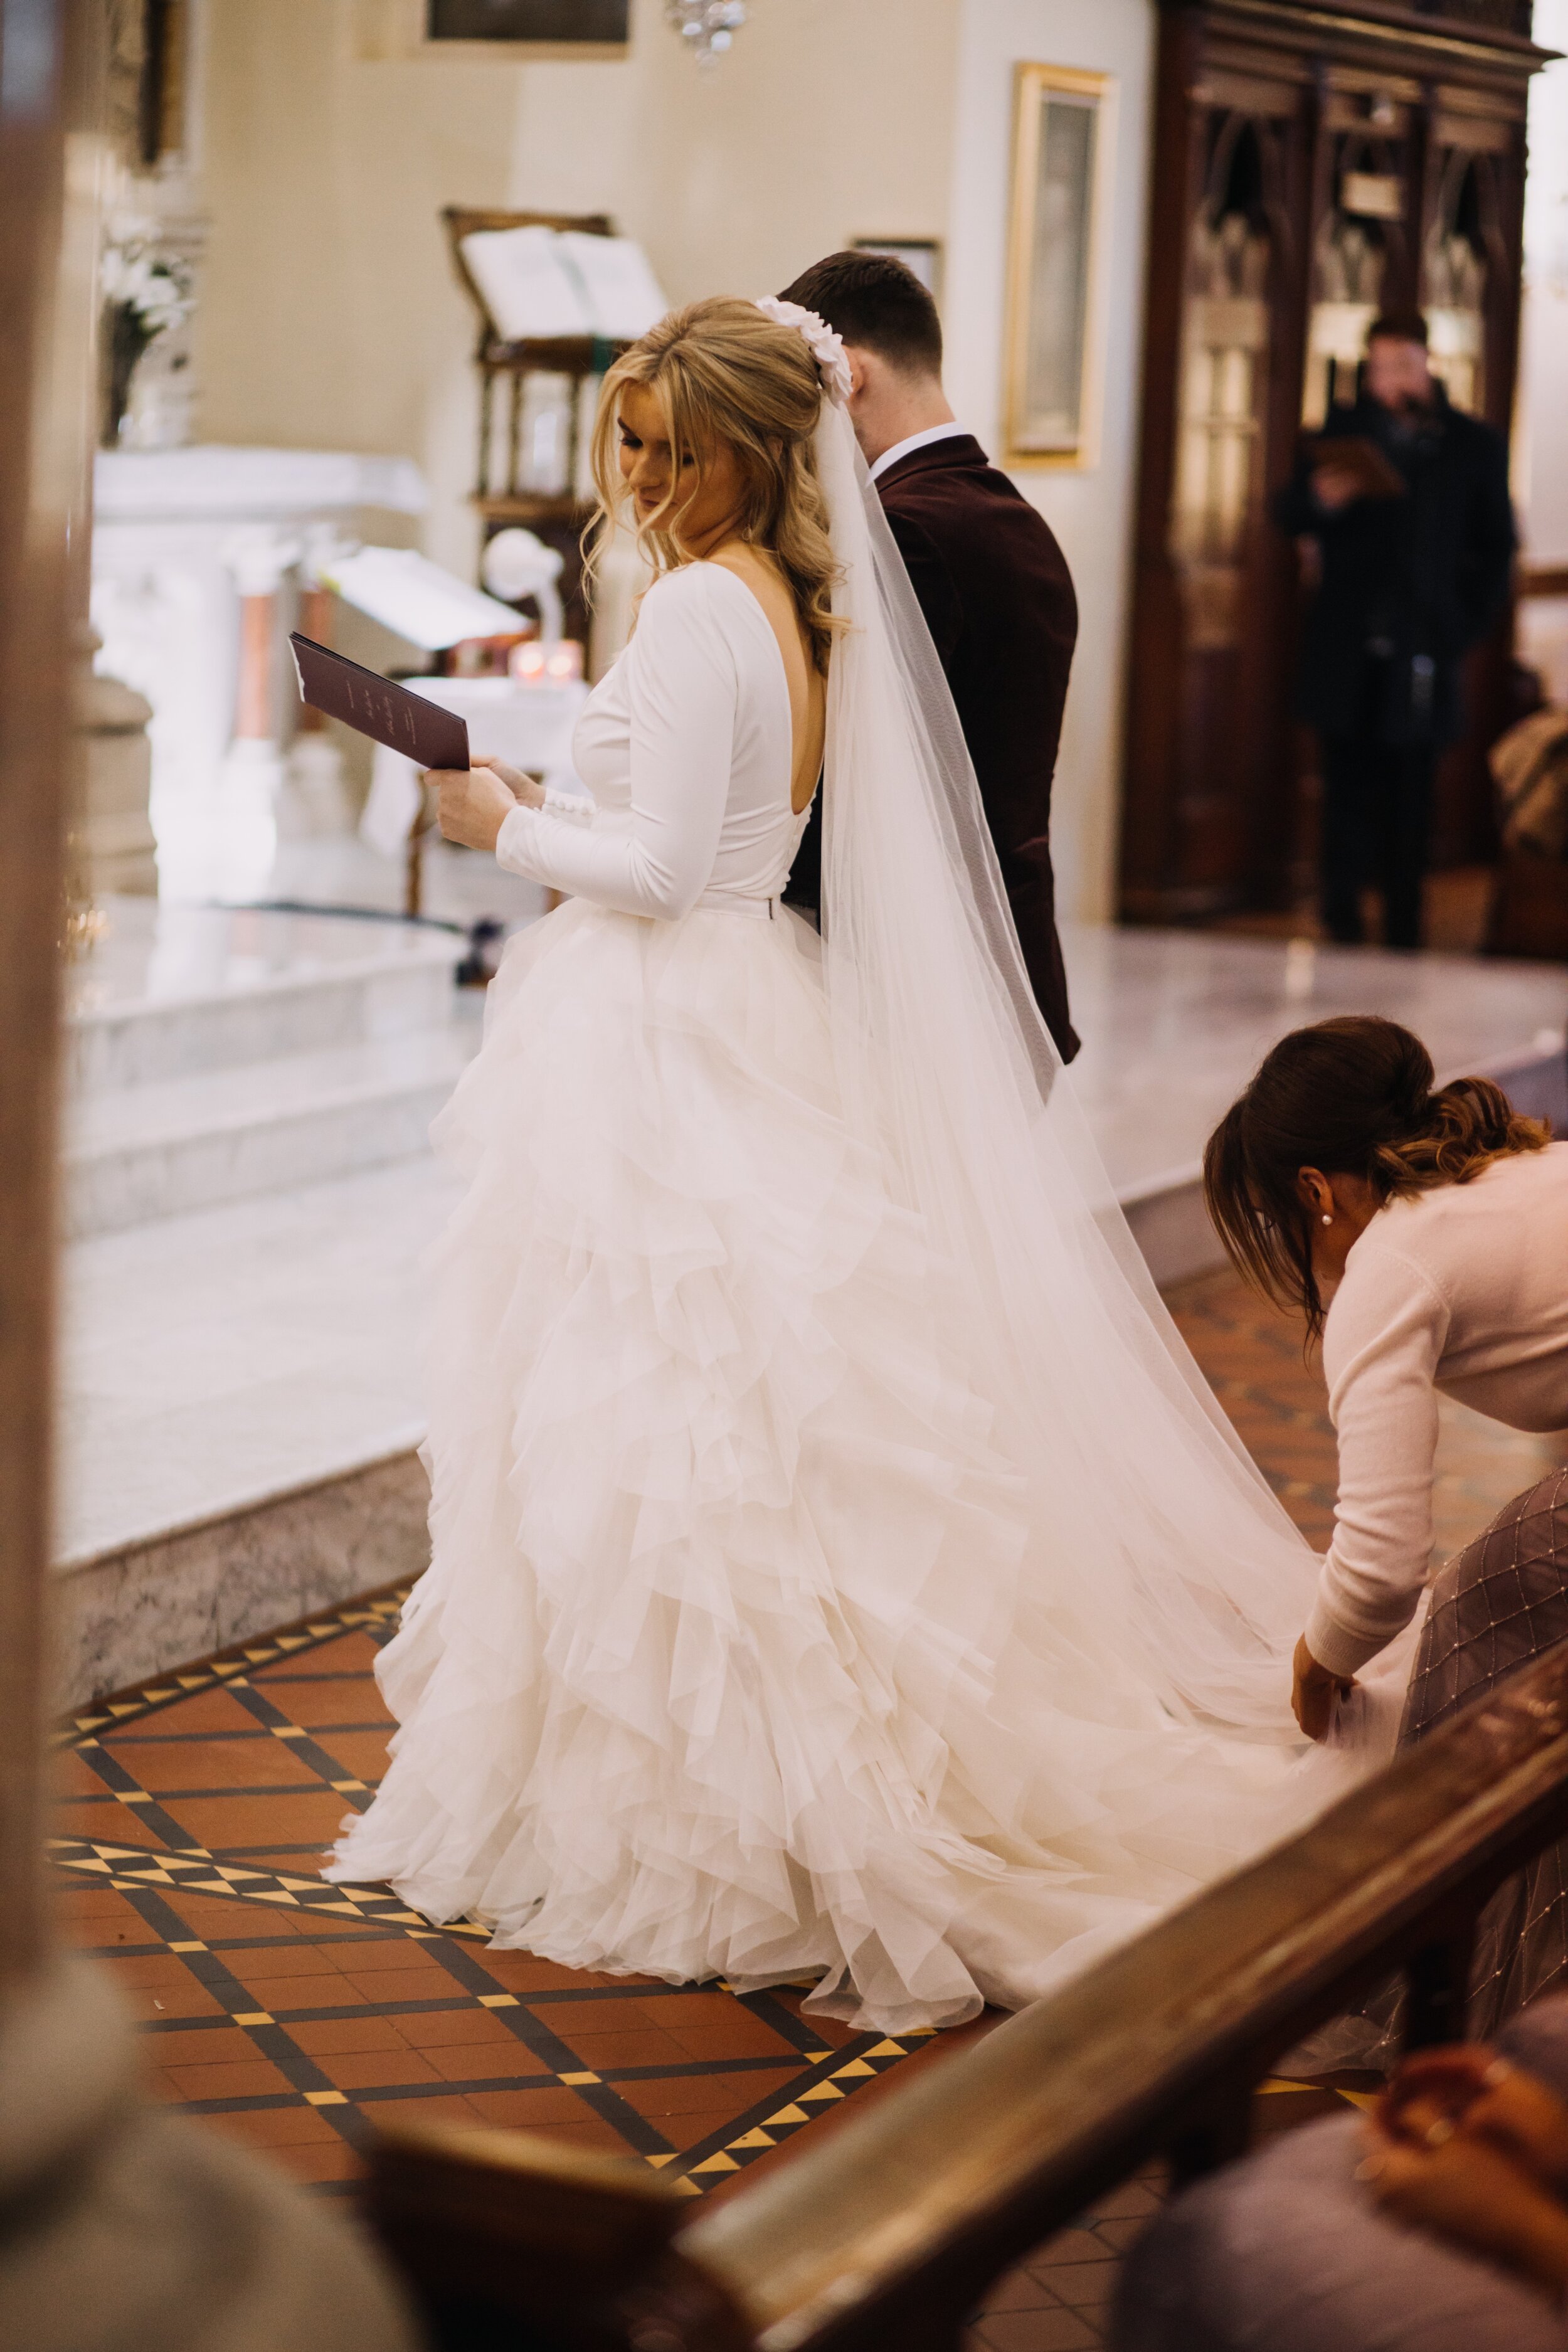 Beautiful bride Lisa wore a wedding dress by Halfpenny London